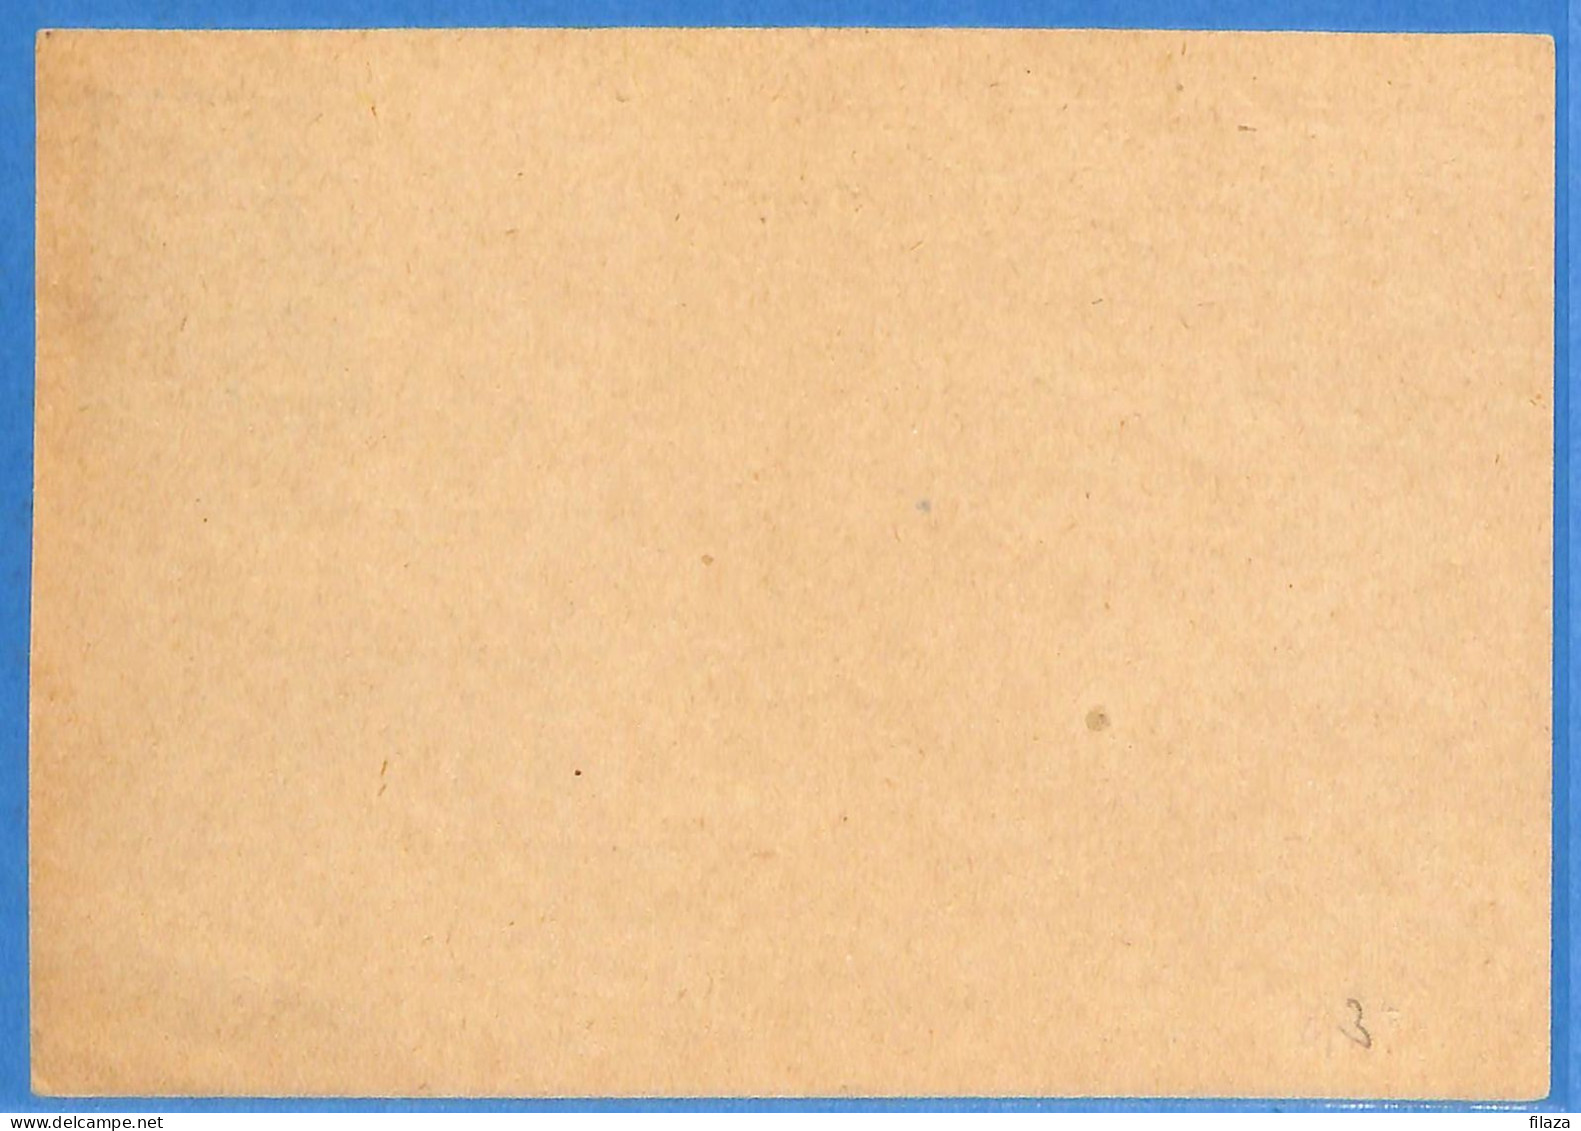 Allemagne Reich 1944 - Carte Postale De Konigsberg - G33171 - Briefe U. Dokumente